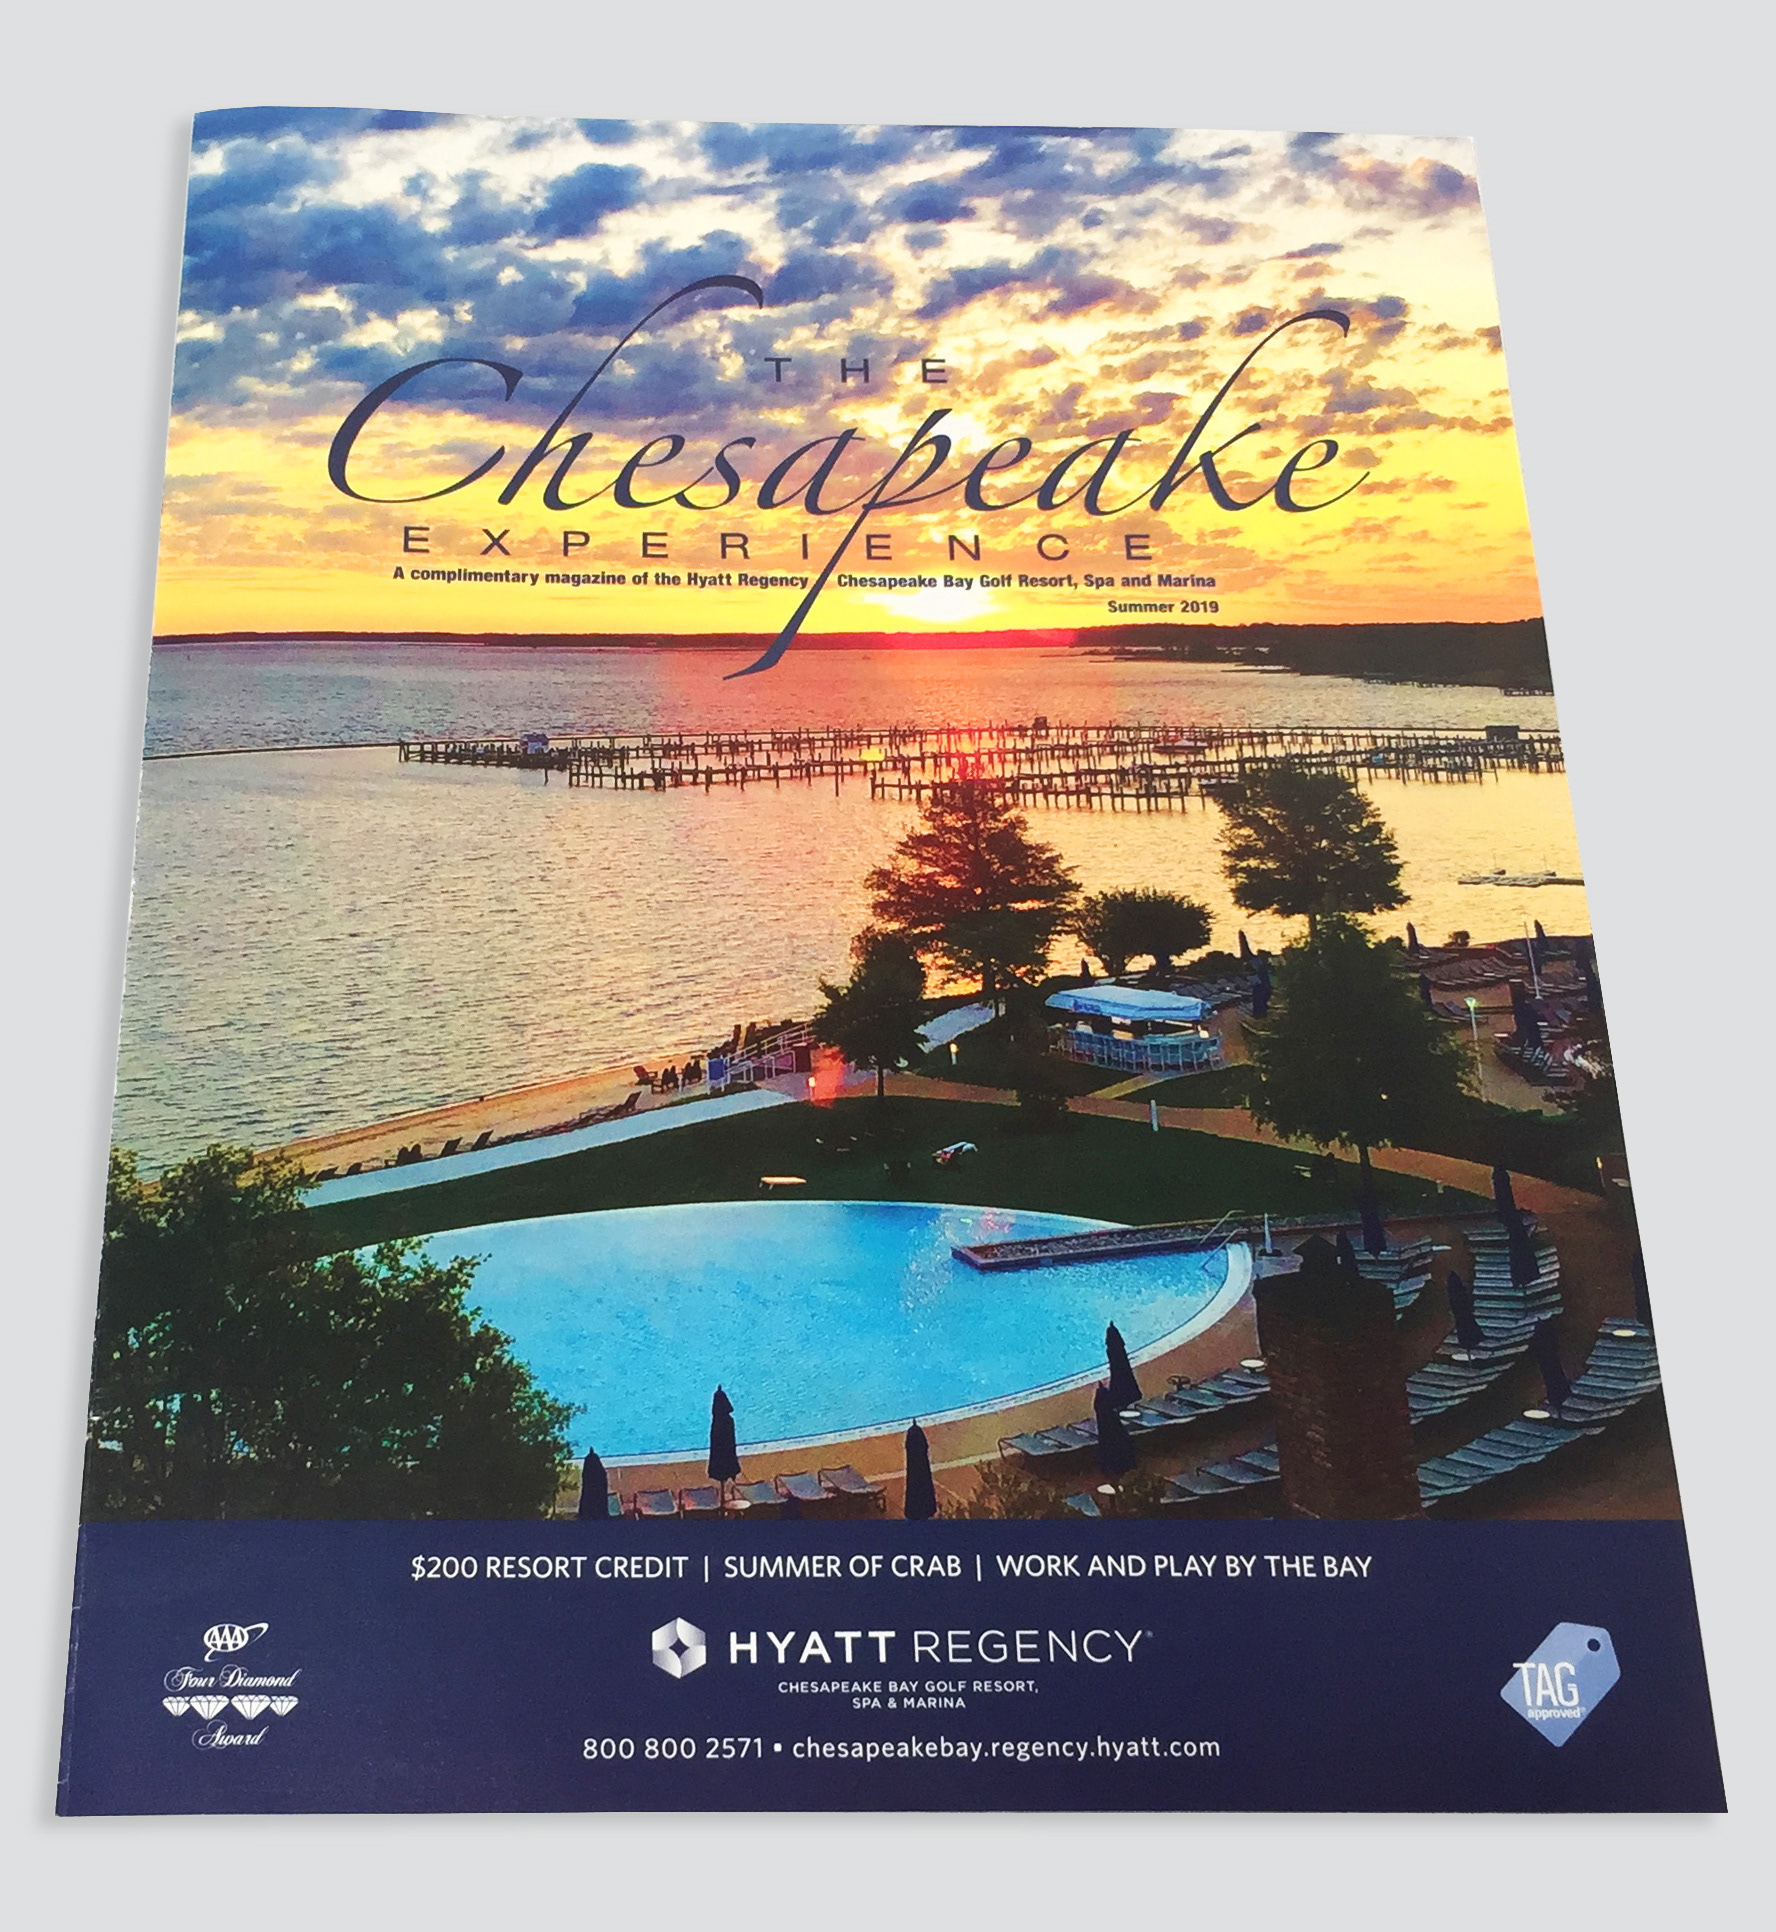 Shannon Cowie - Hyatt Regency Chesapeake Bay Golf Resort, Spa & Marina